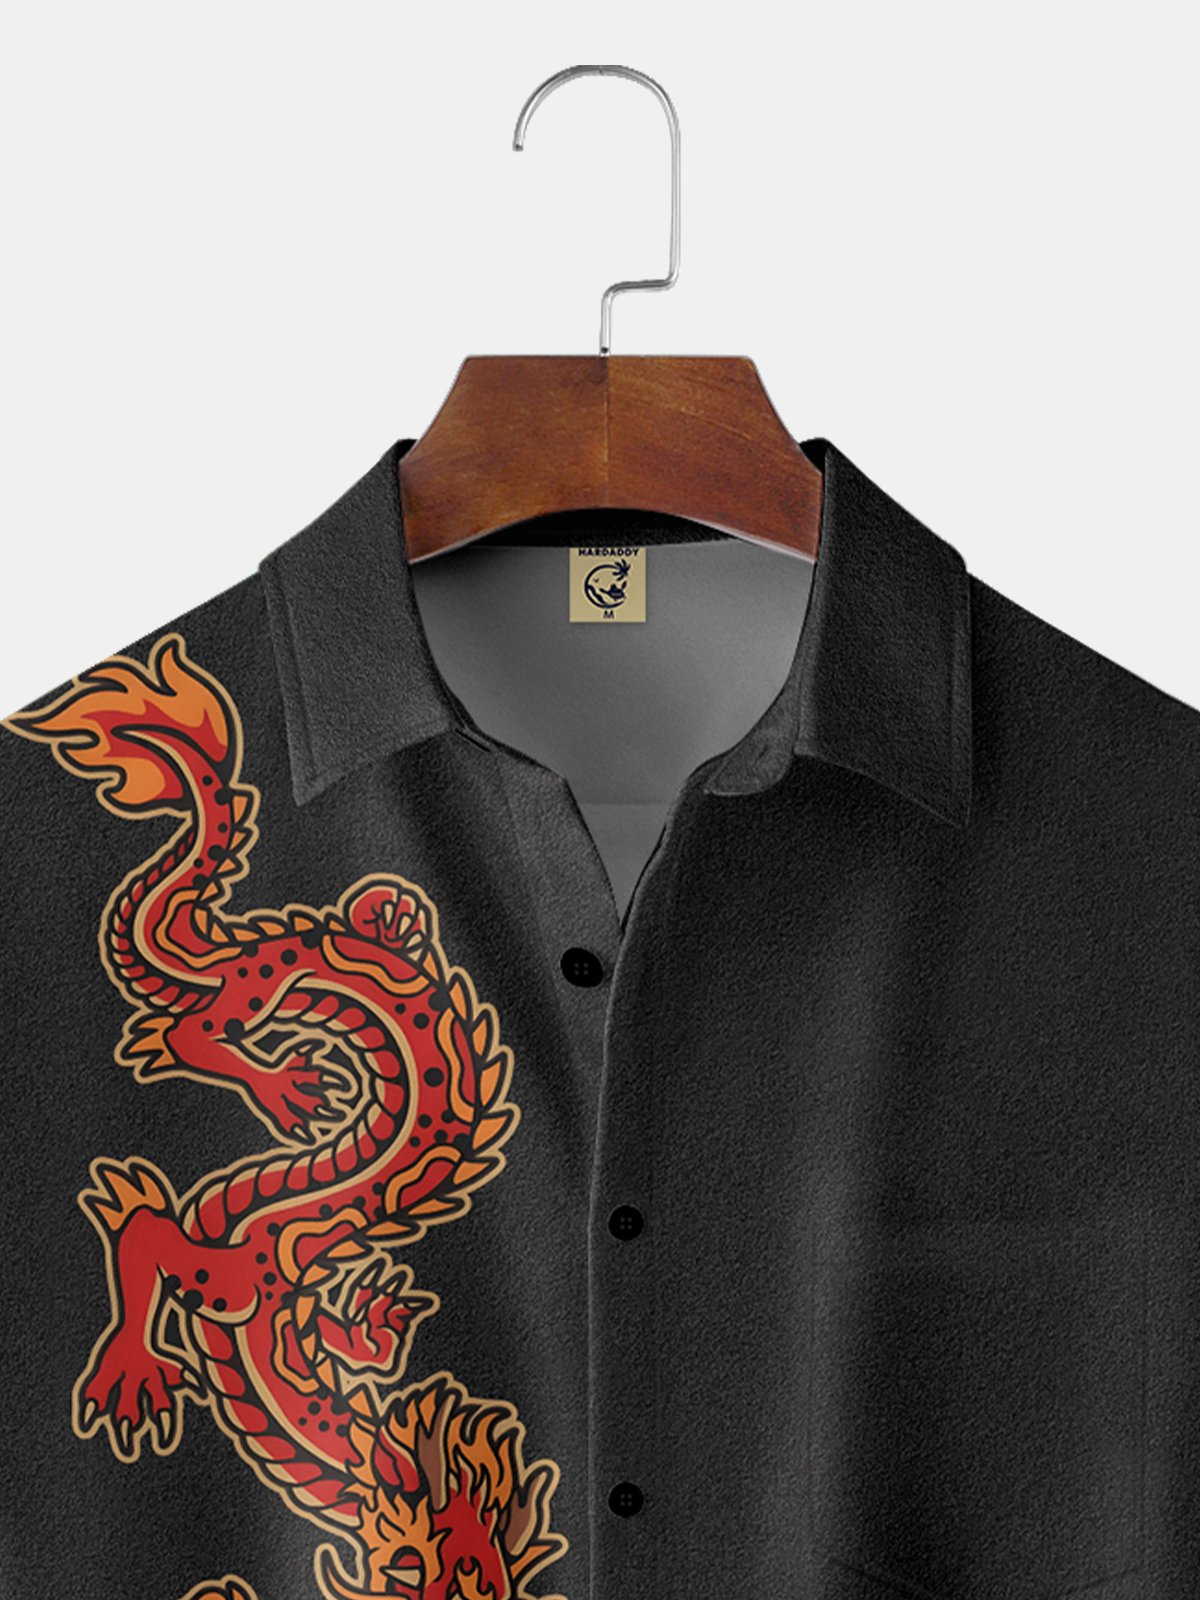 Hardaddy Moisture-Wicking Tropical Dragon Print Shirt